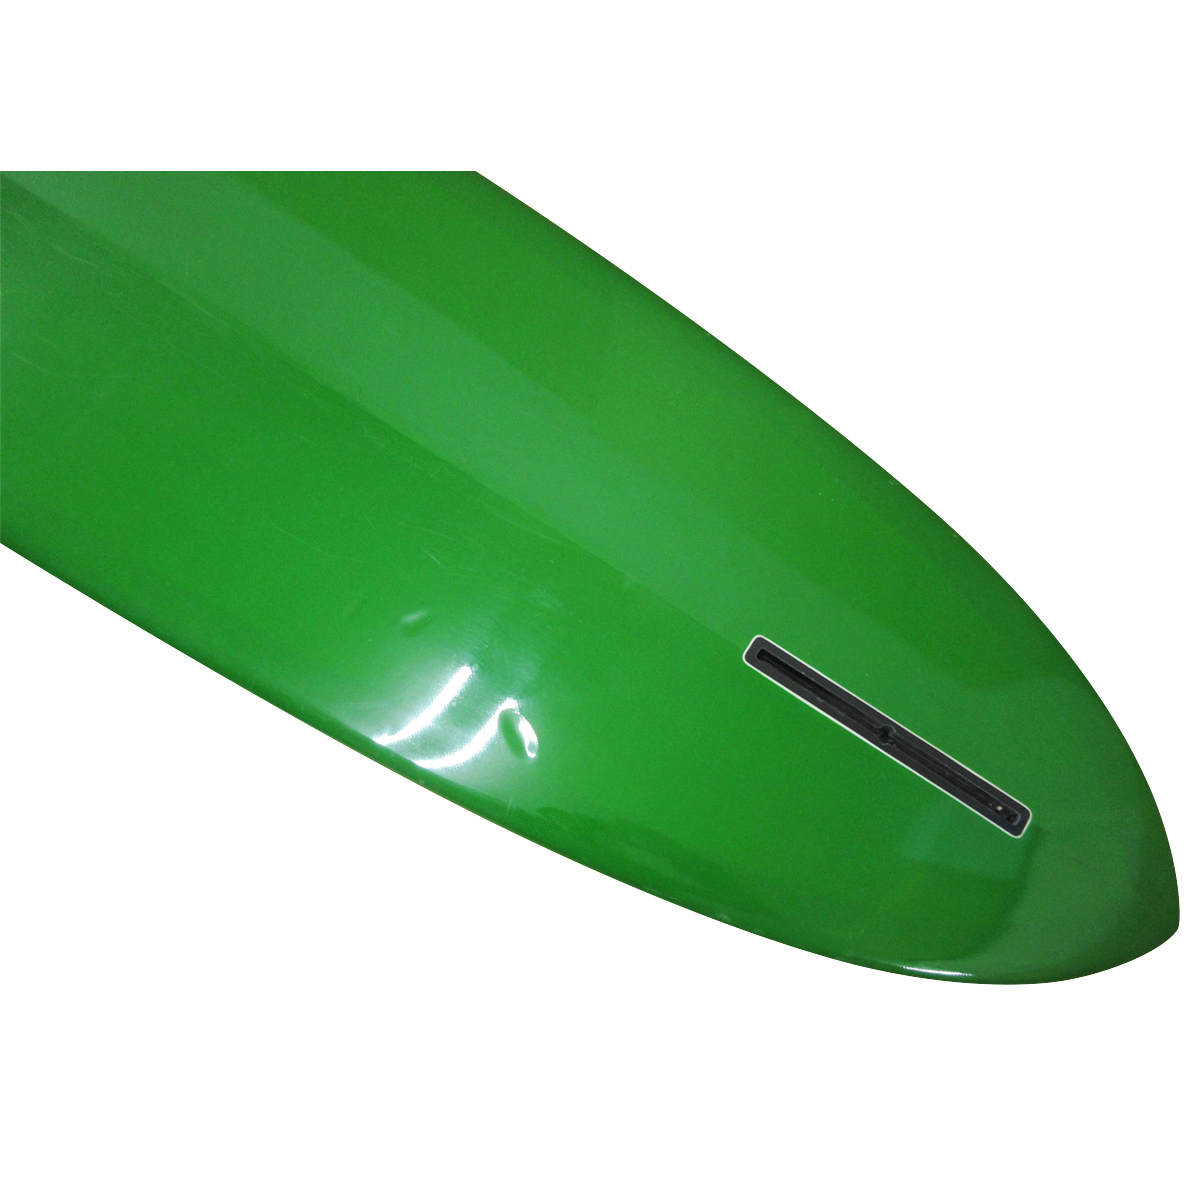 YU SURF CLASSIC / Round Pin Noserider 9'6